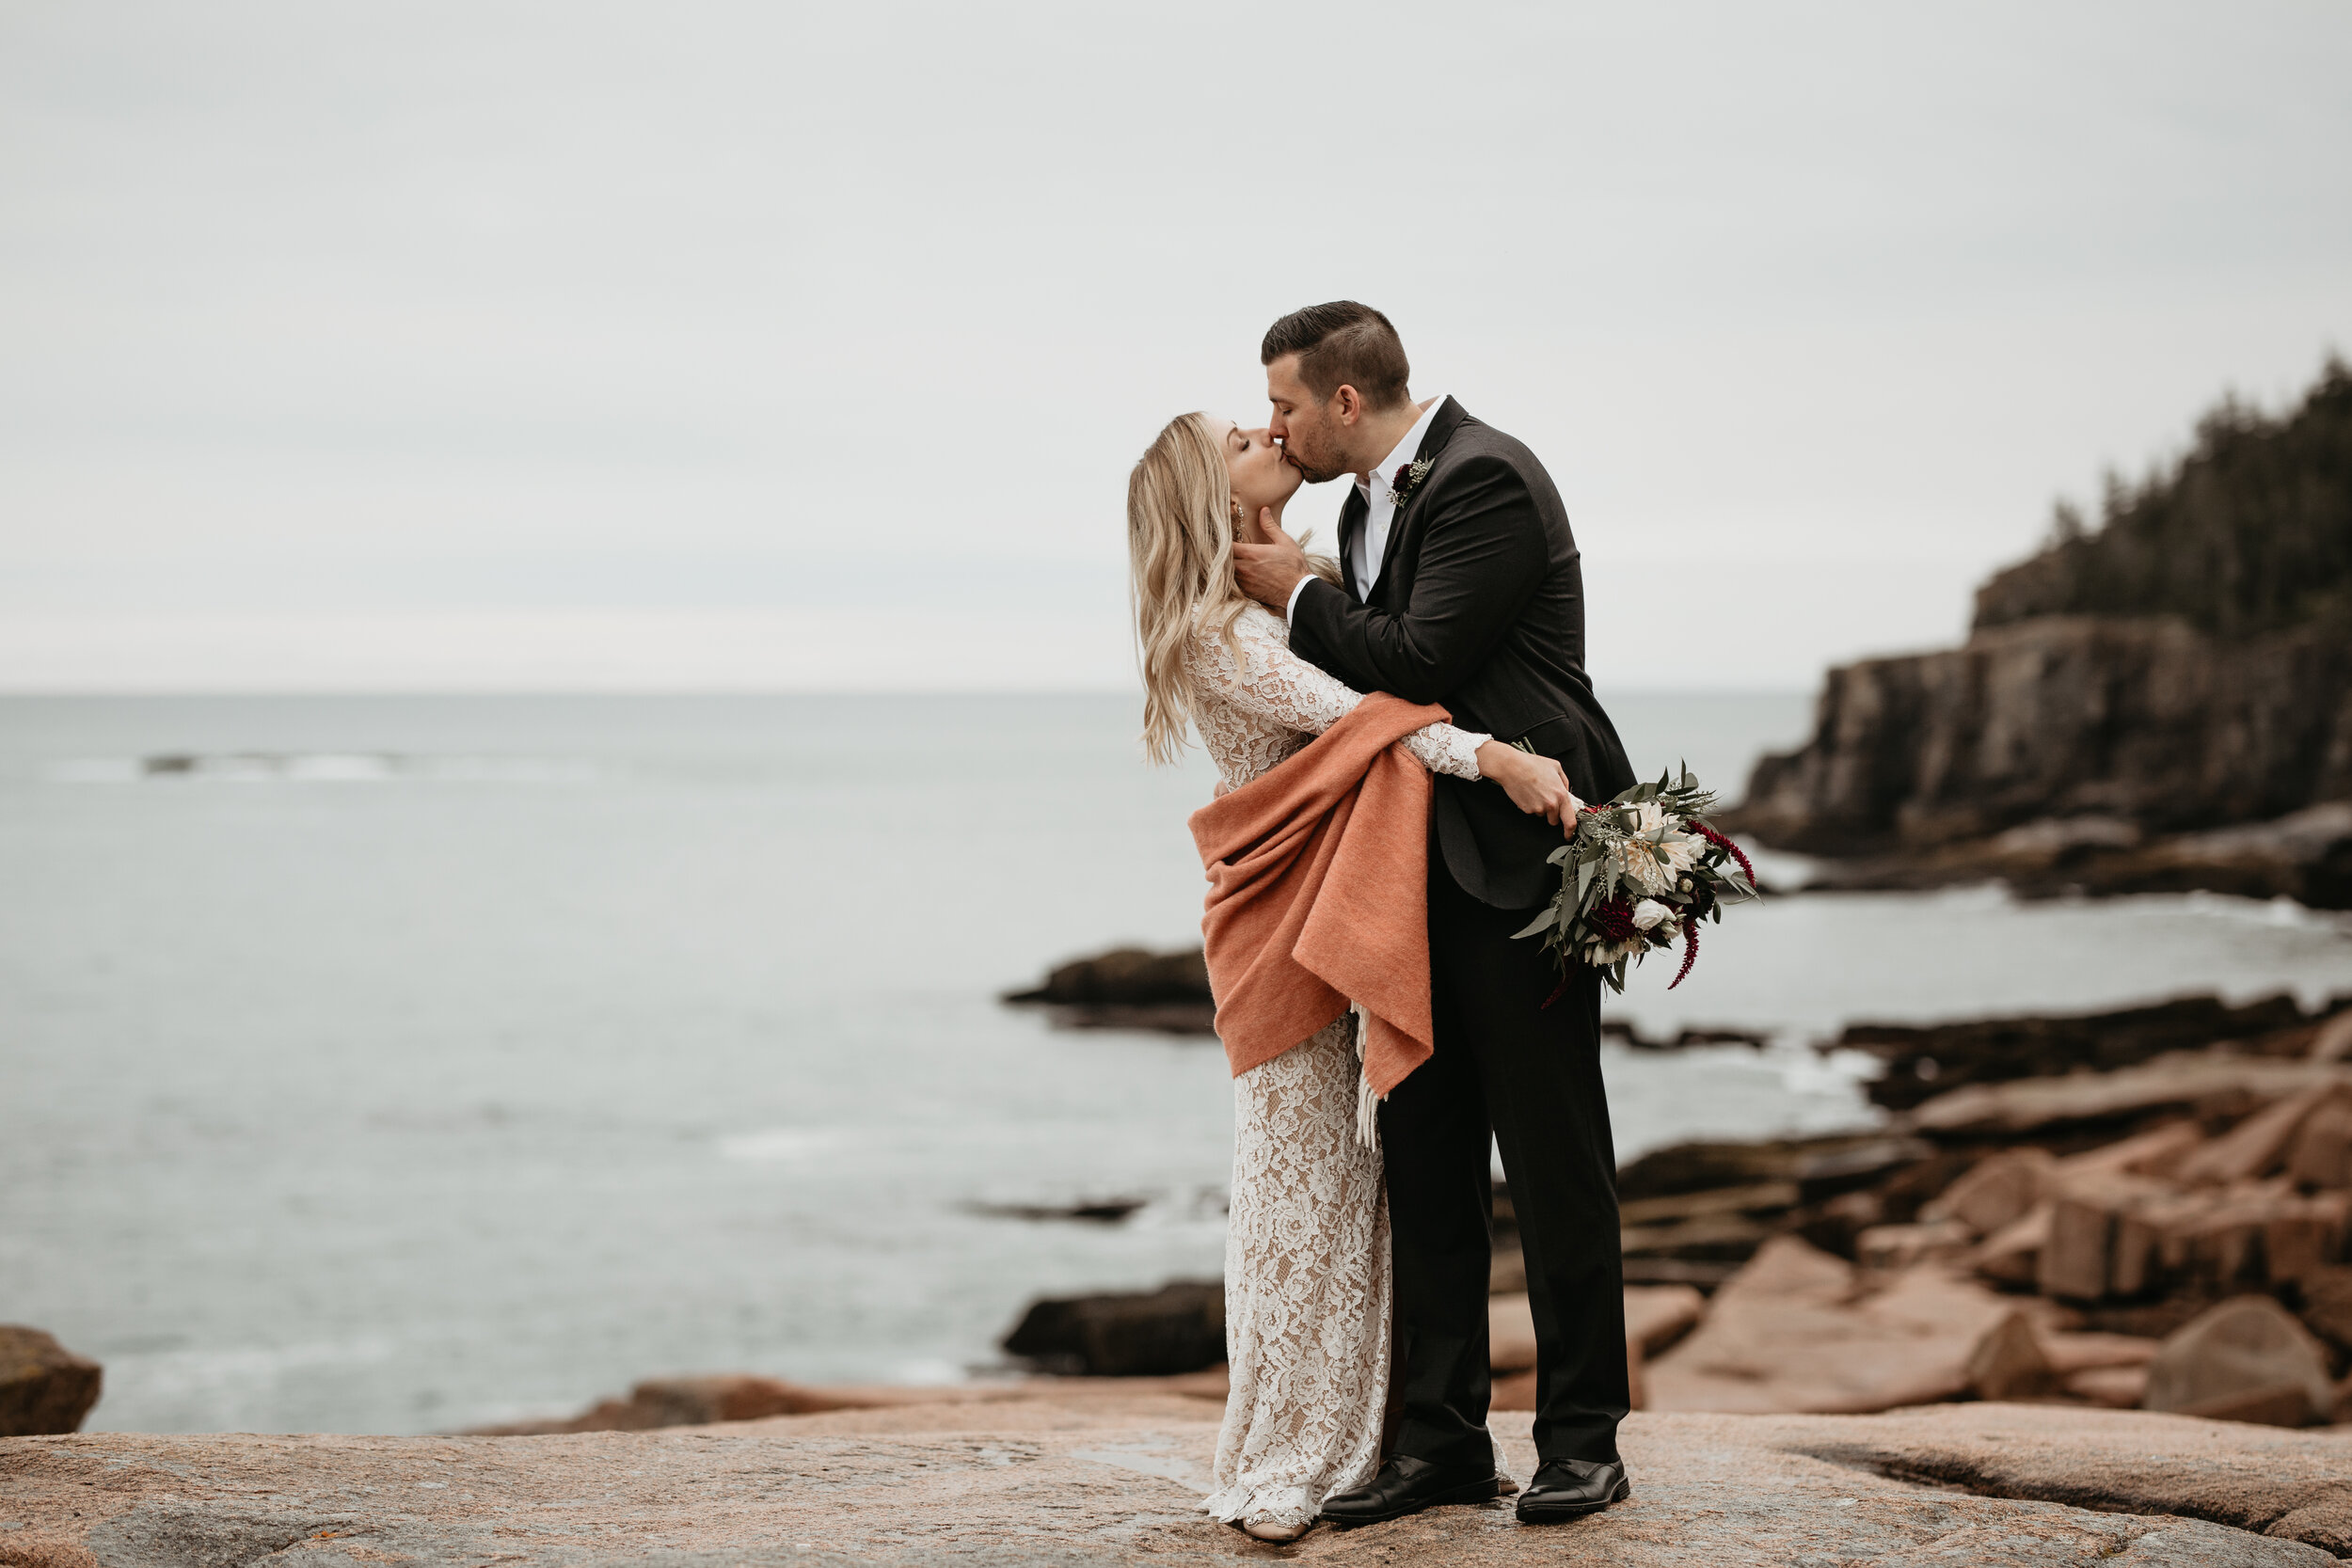 Nicole-Daacke-Photography-Acadia-national-park-elopement-photography-elopement-in-acadia-inspiration-maine-intimate-wedding-destination-elopement-photographer-rainy-day-maine-coast-bar-harbor-elopement-photography-158.jpg